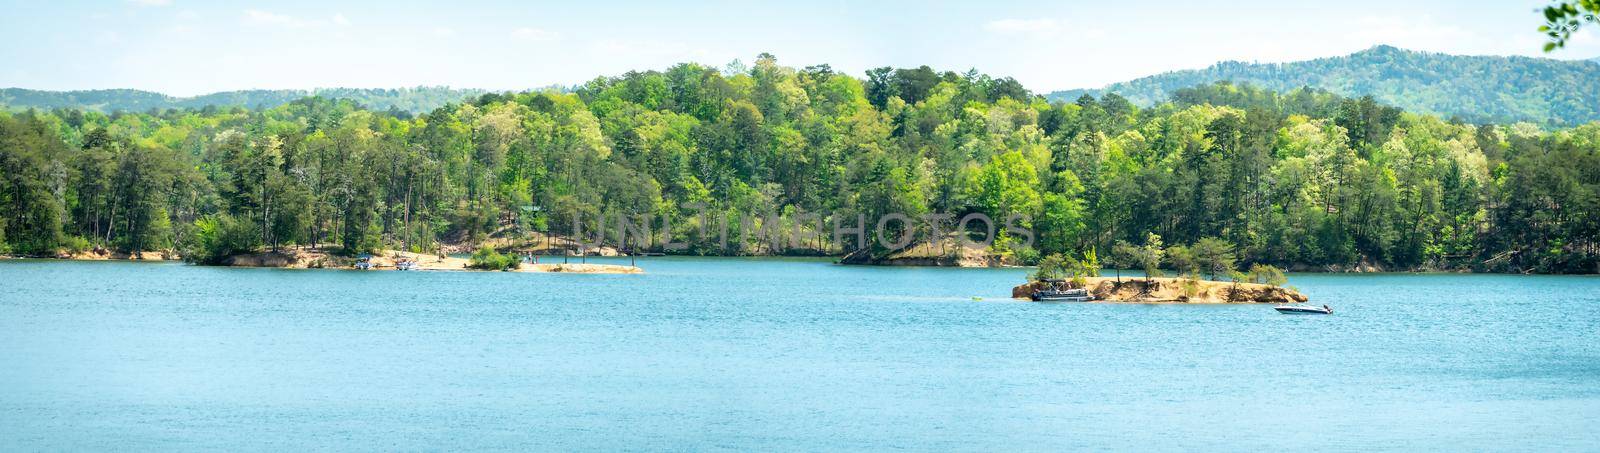 water scenes on lake ocoee north carolina by digidreamgrafix